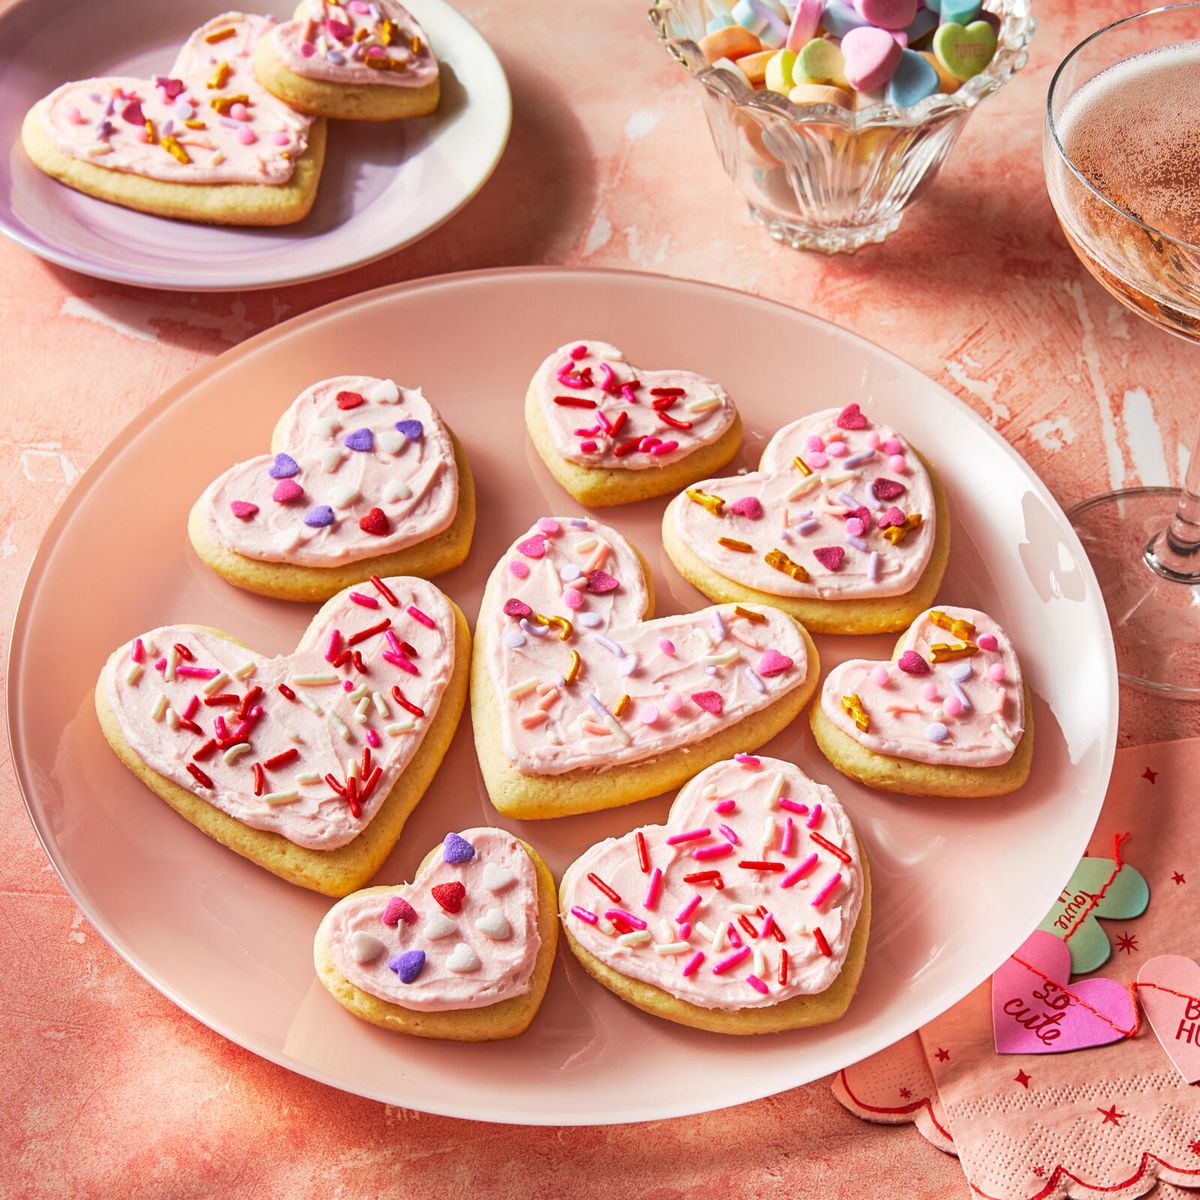 the pioneer woman's heart cookies recipe